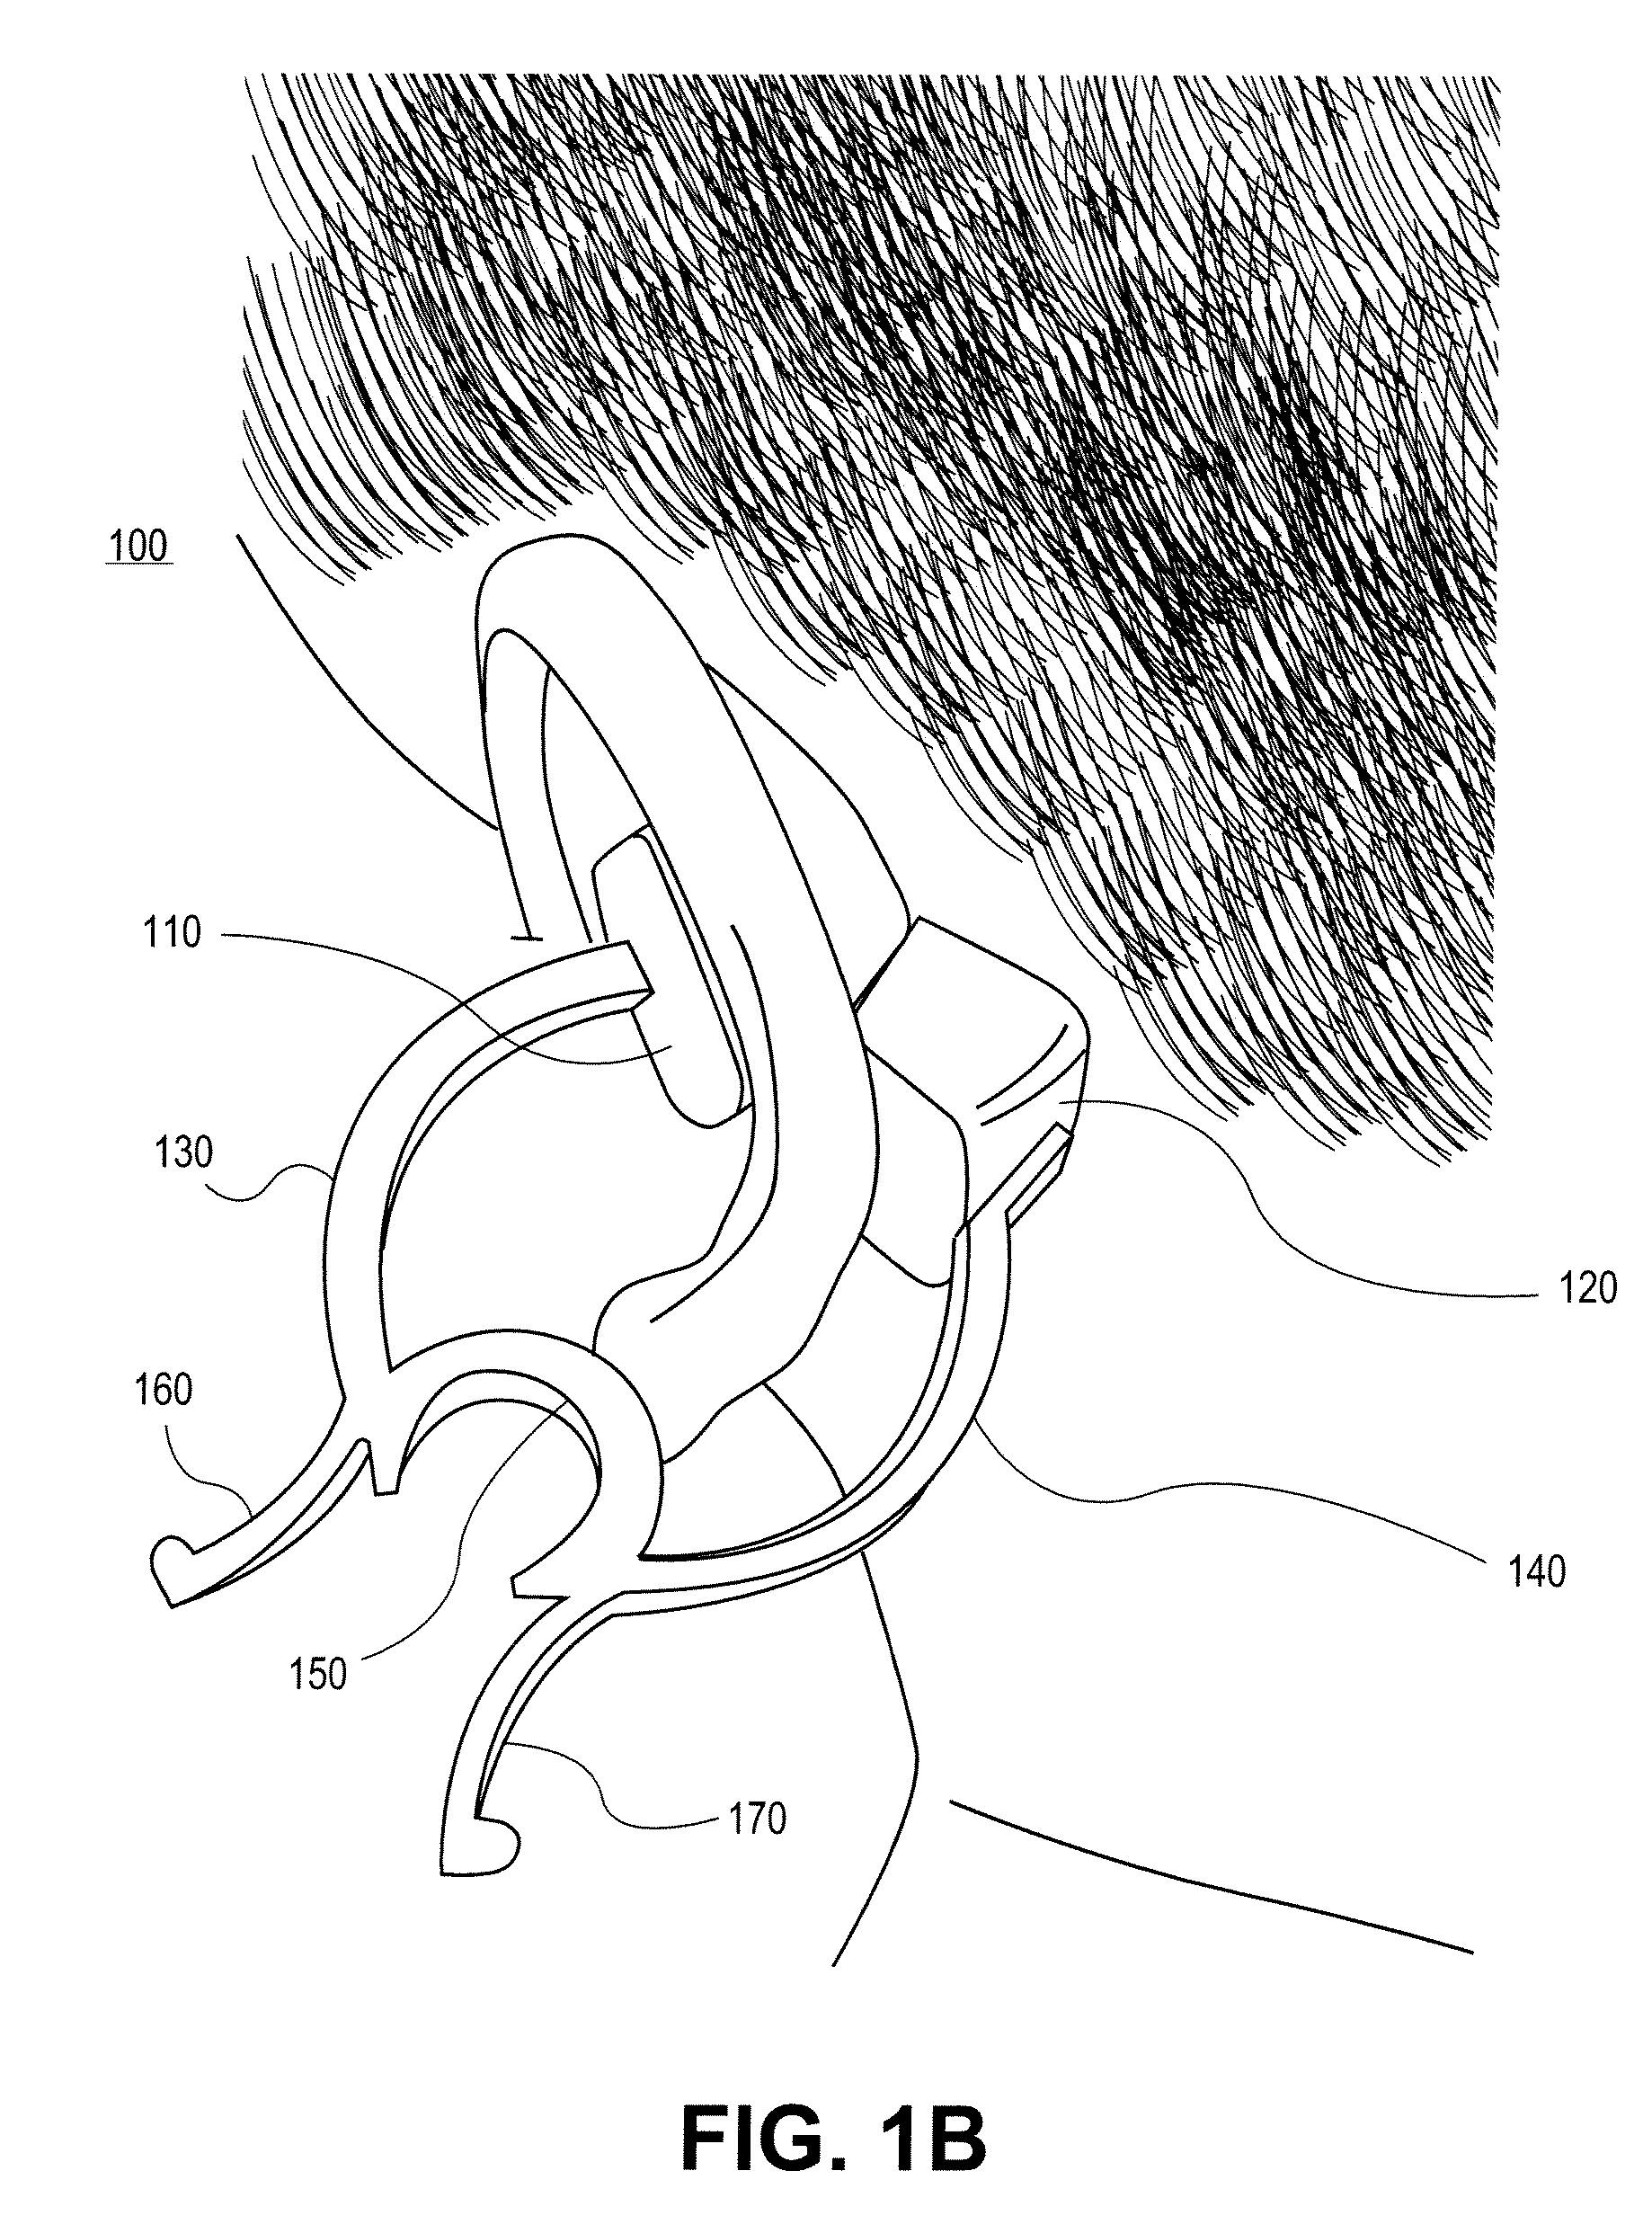 External ear-placed non-invasive physiological sensor